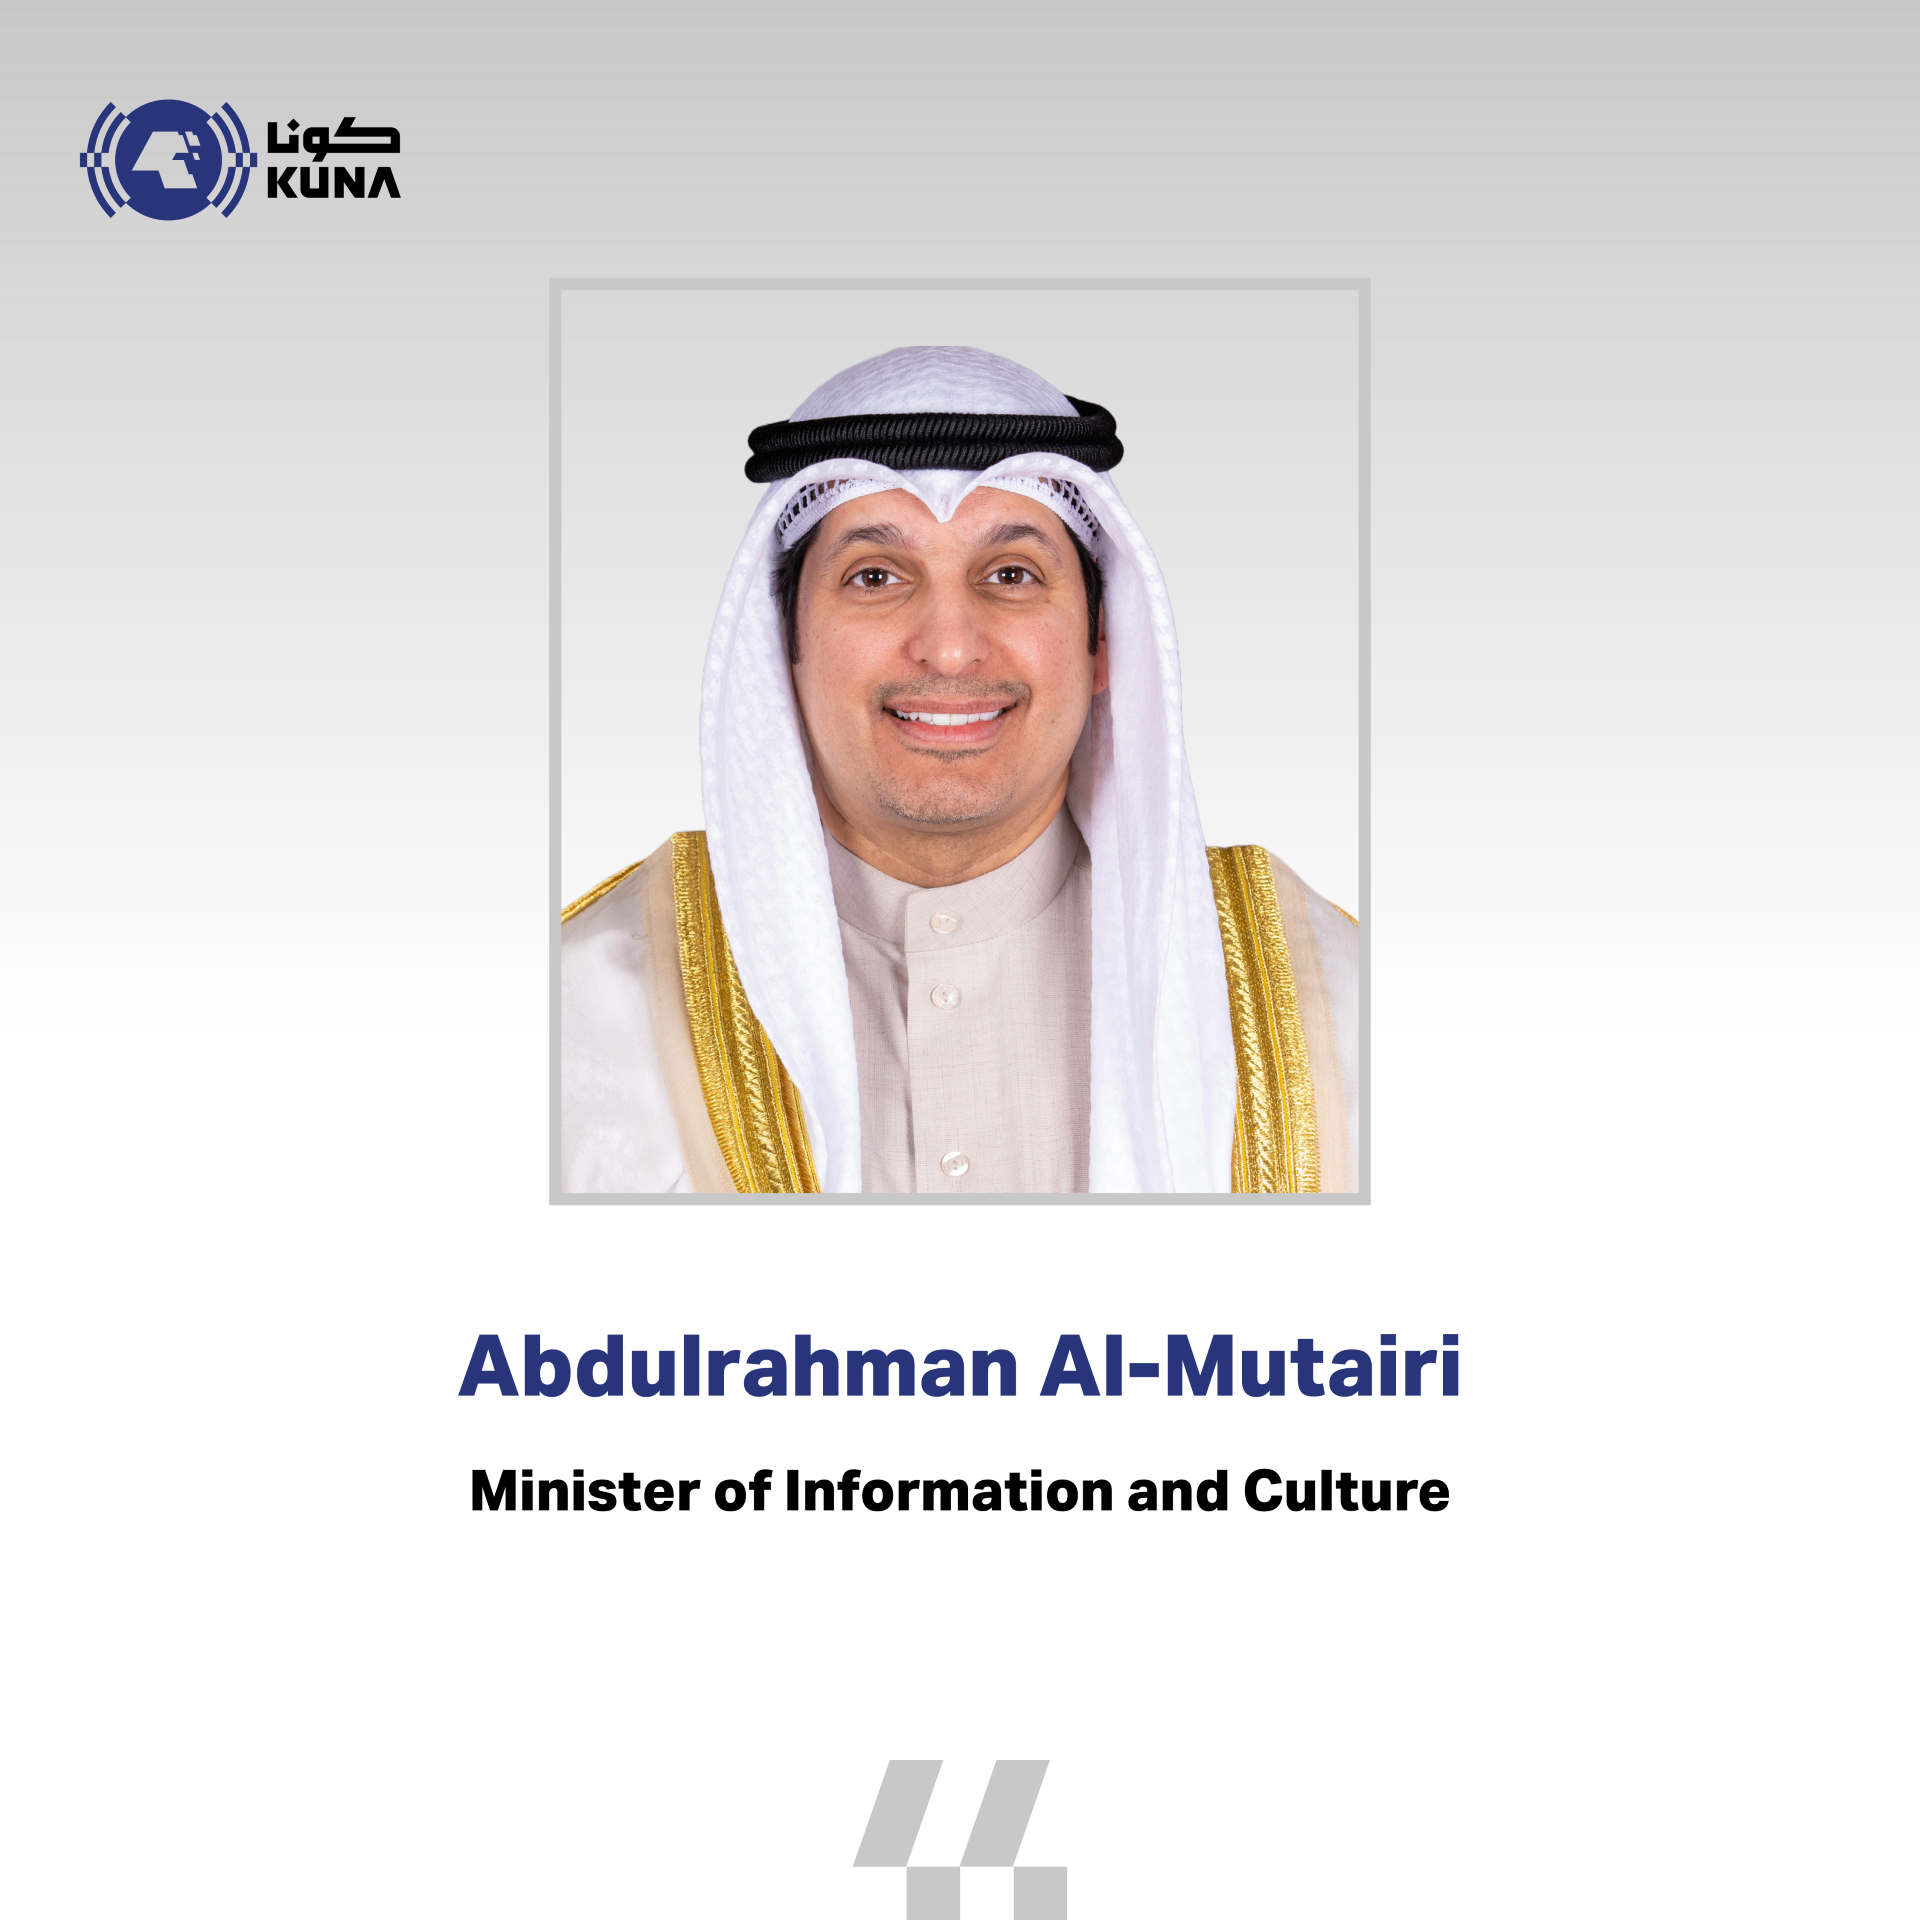 Minister of Information and Culture Abdulrahman Al-Mutairi